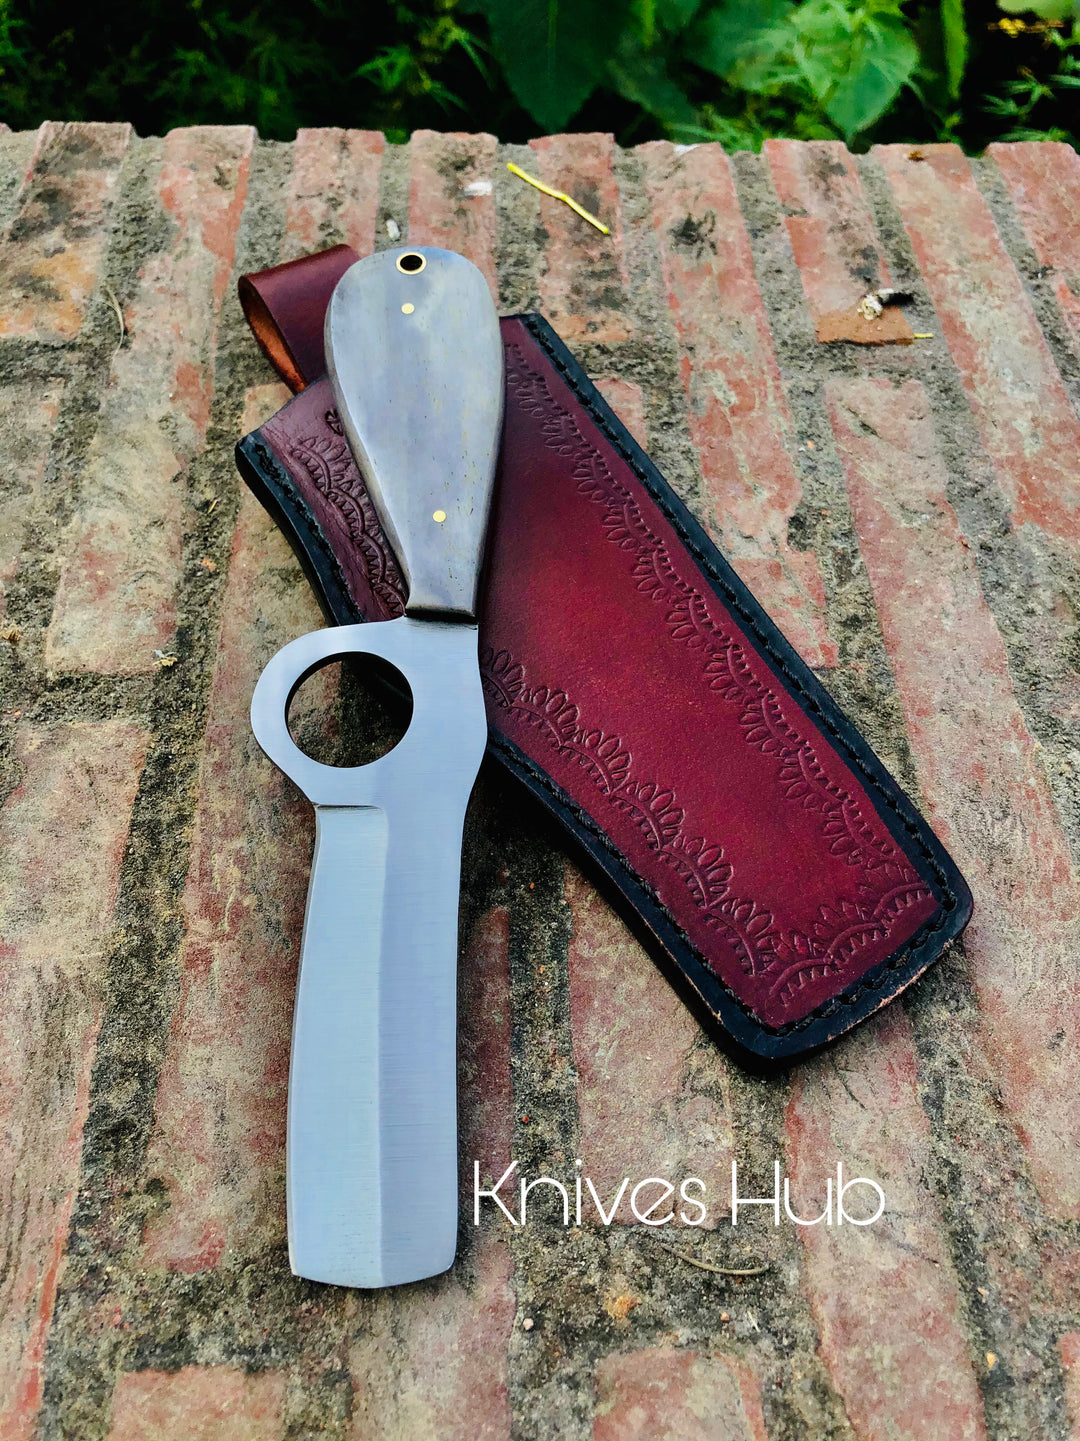 Handmade D2 Steel Bull cutter knife with leather sheath